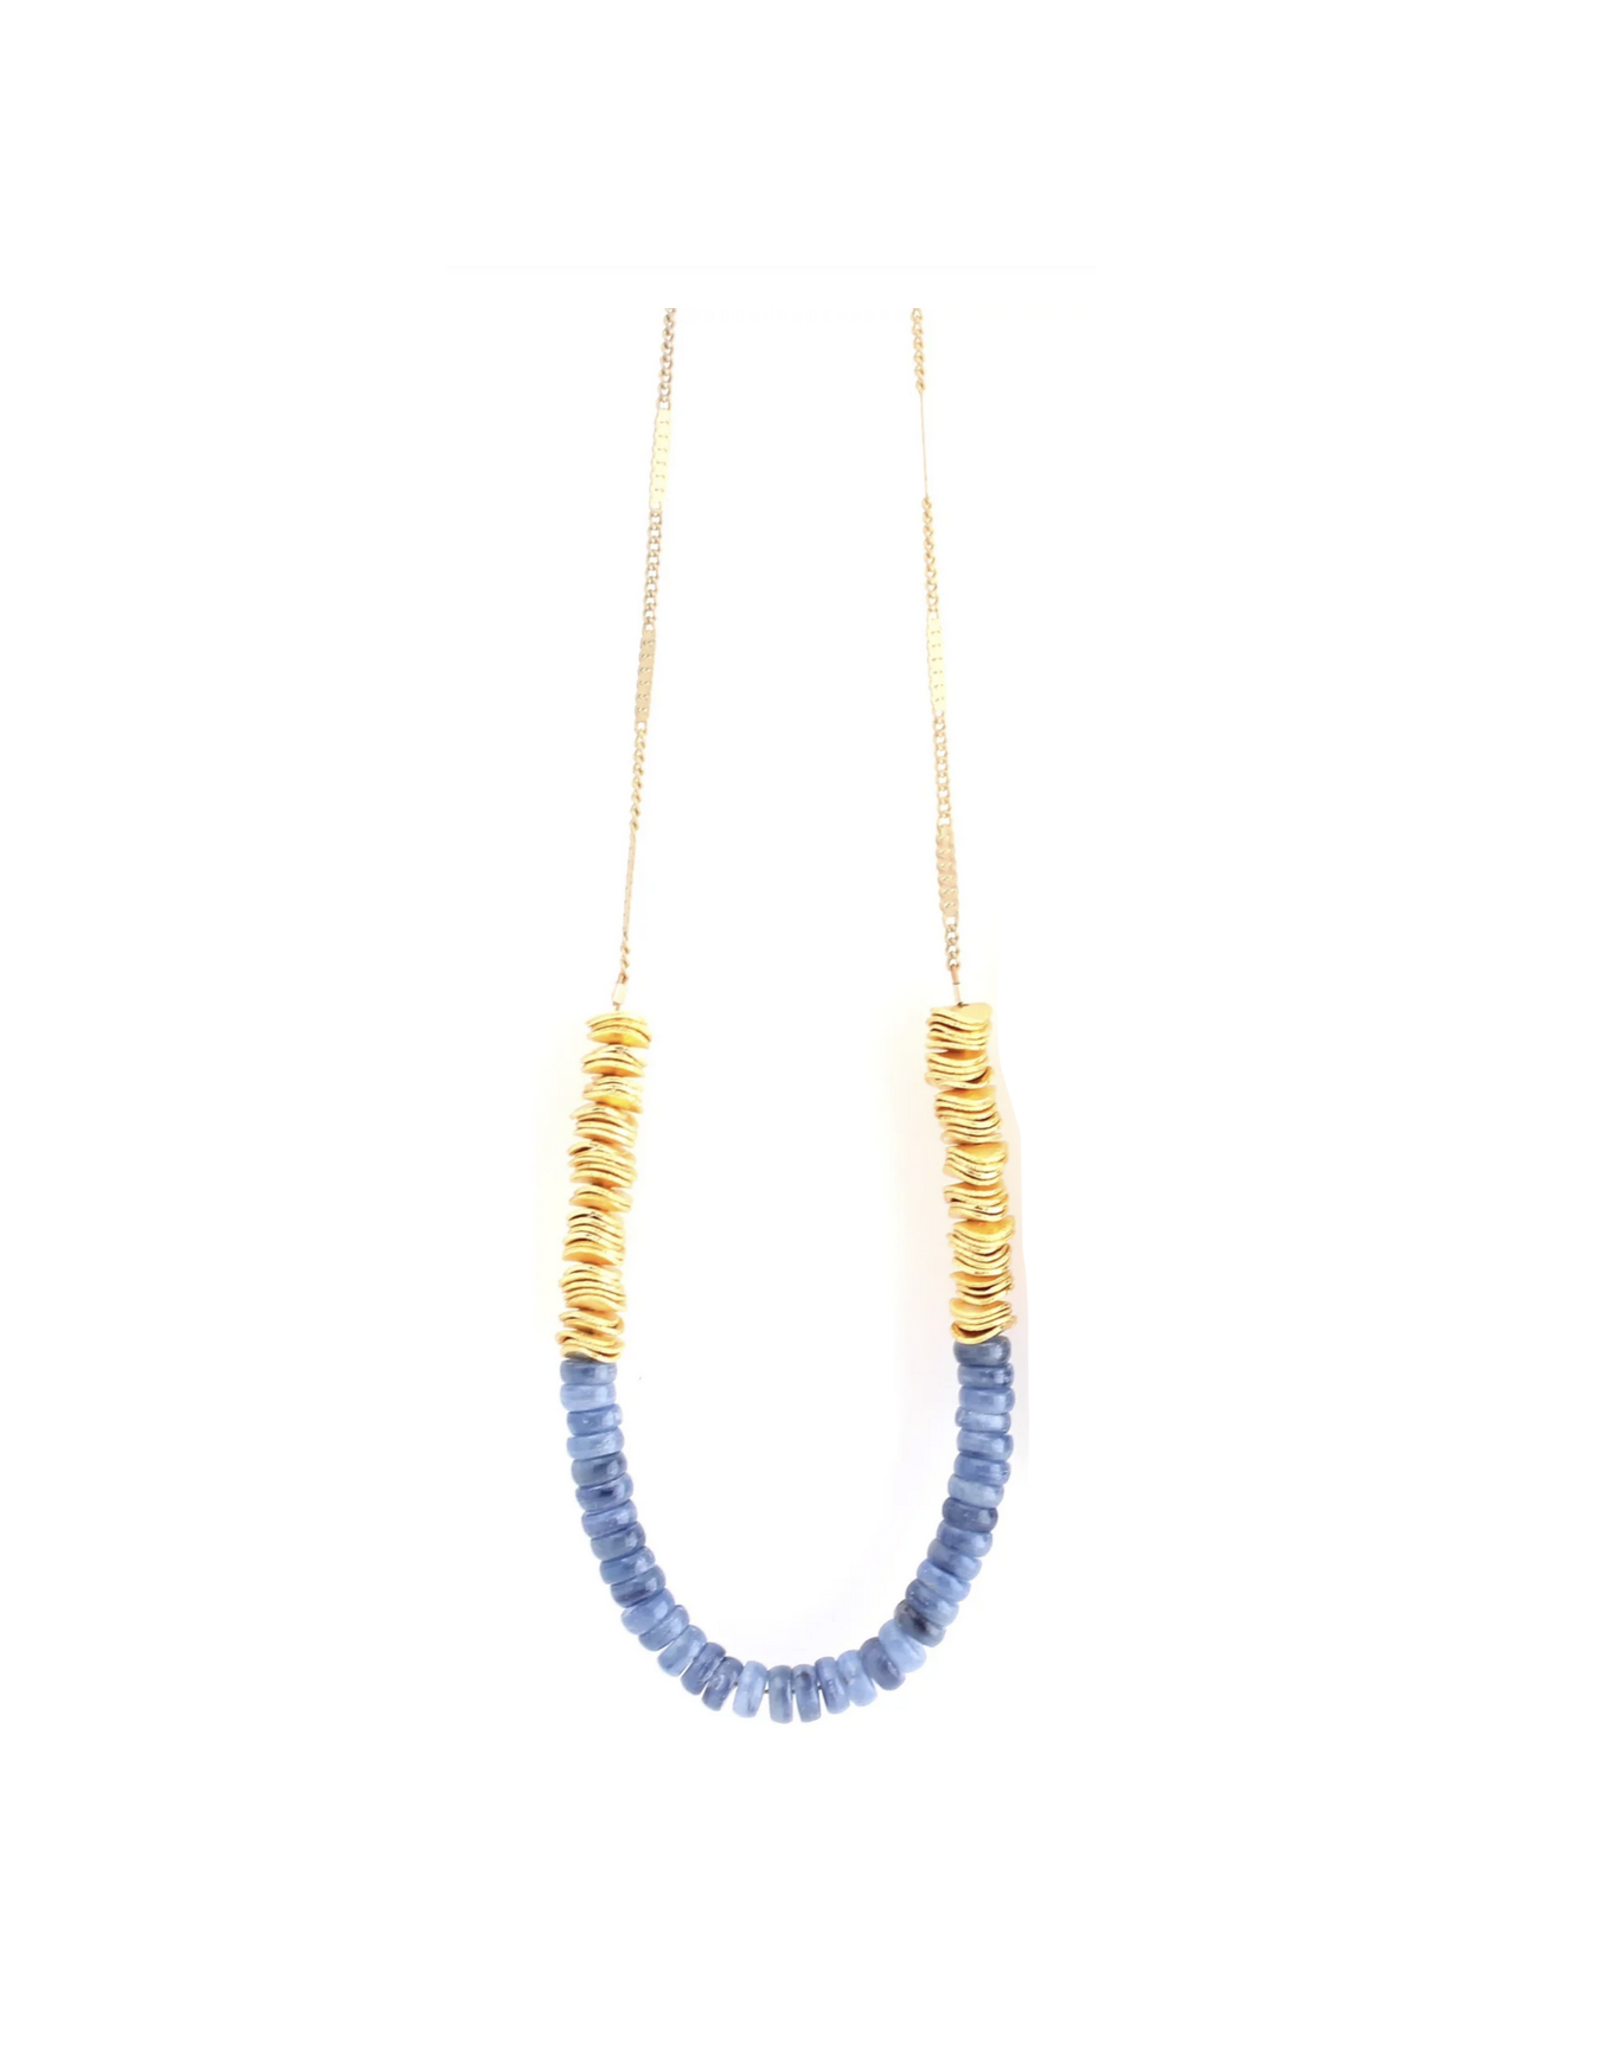 Tide Necklace - Blue Kyanite Gemstone & Gold Beads